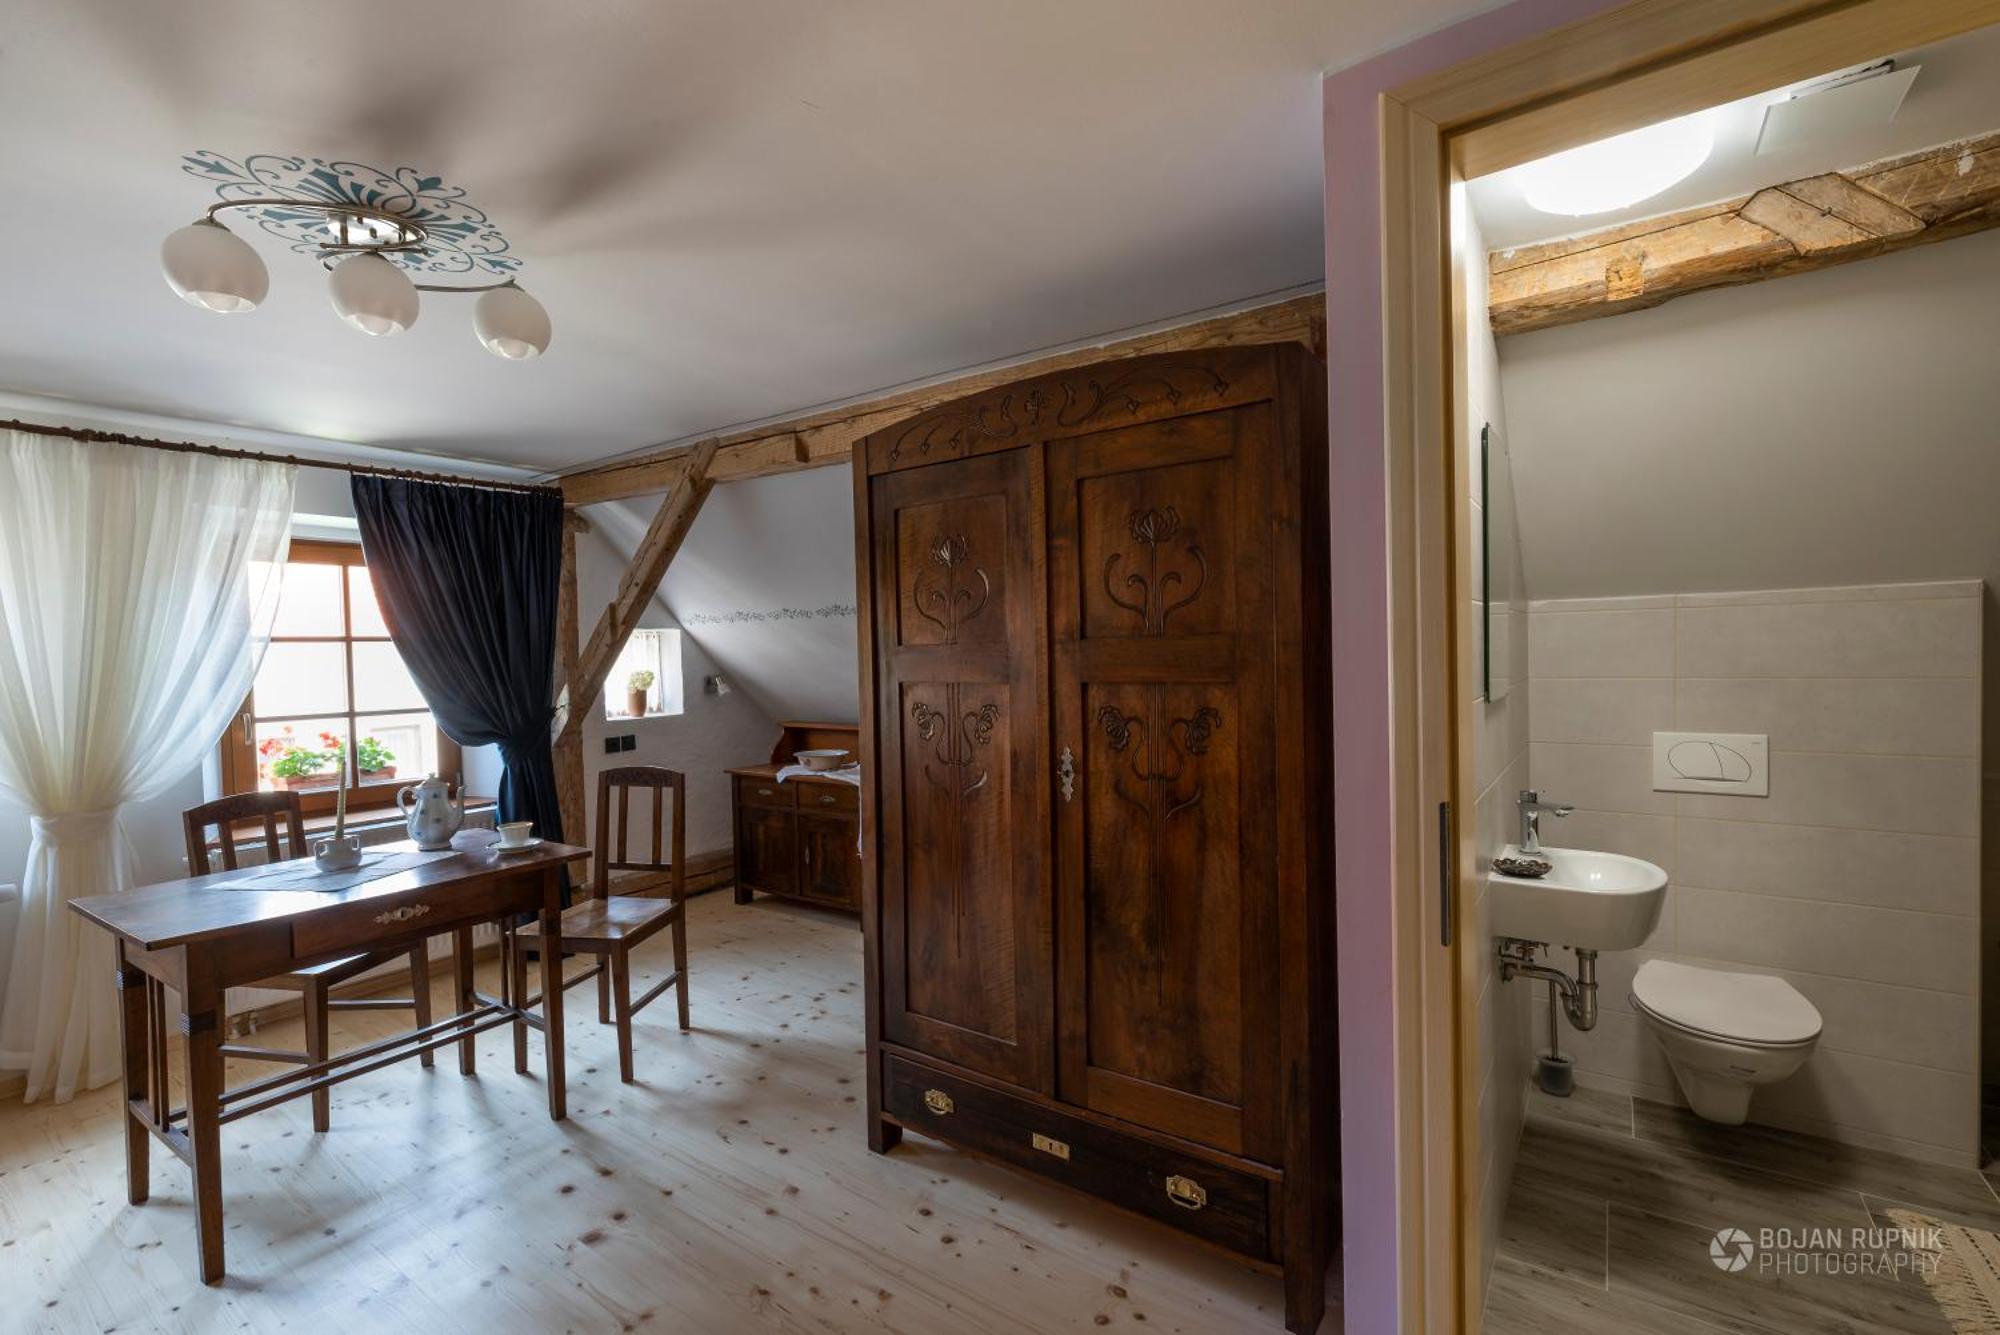 Notranjska Hisa - Traditional Country House, Close To The World Attraction Cerknica Lake Begunje pri Cerknici 外观 照片